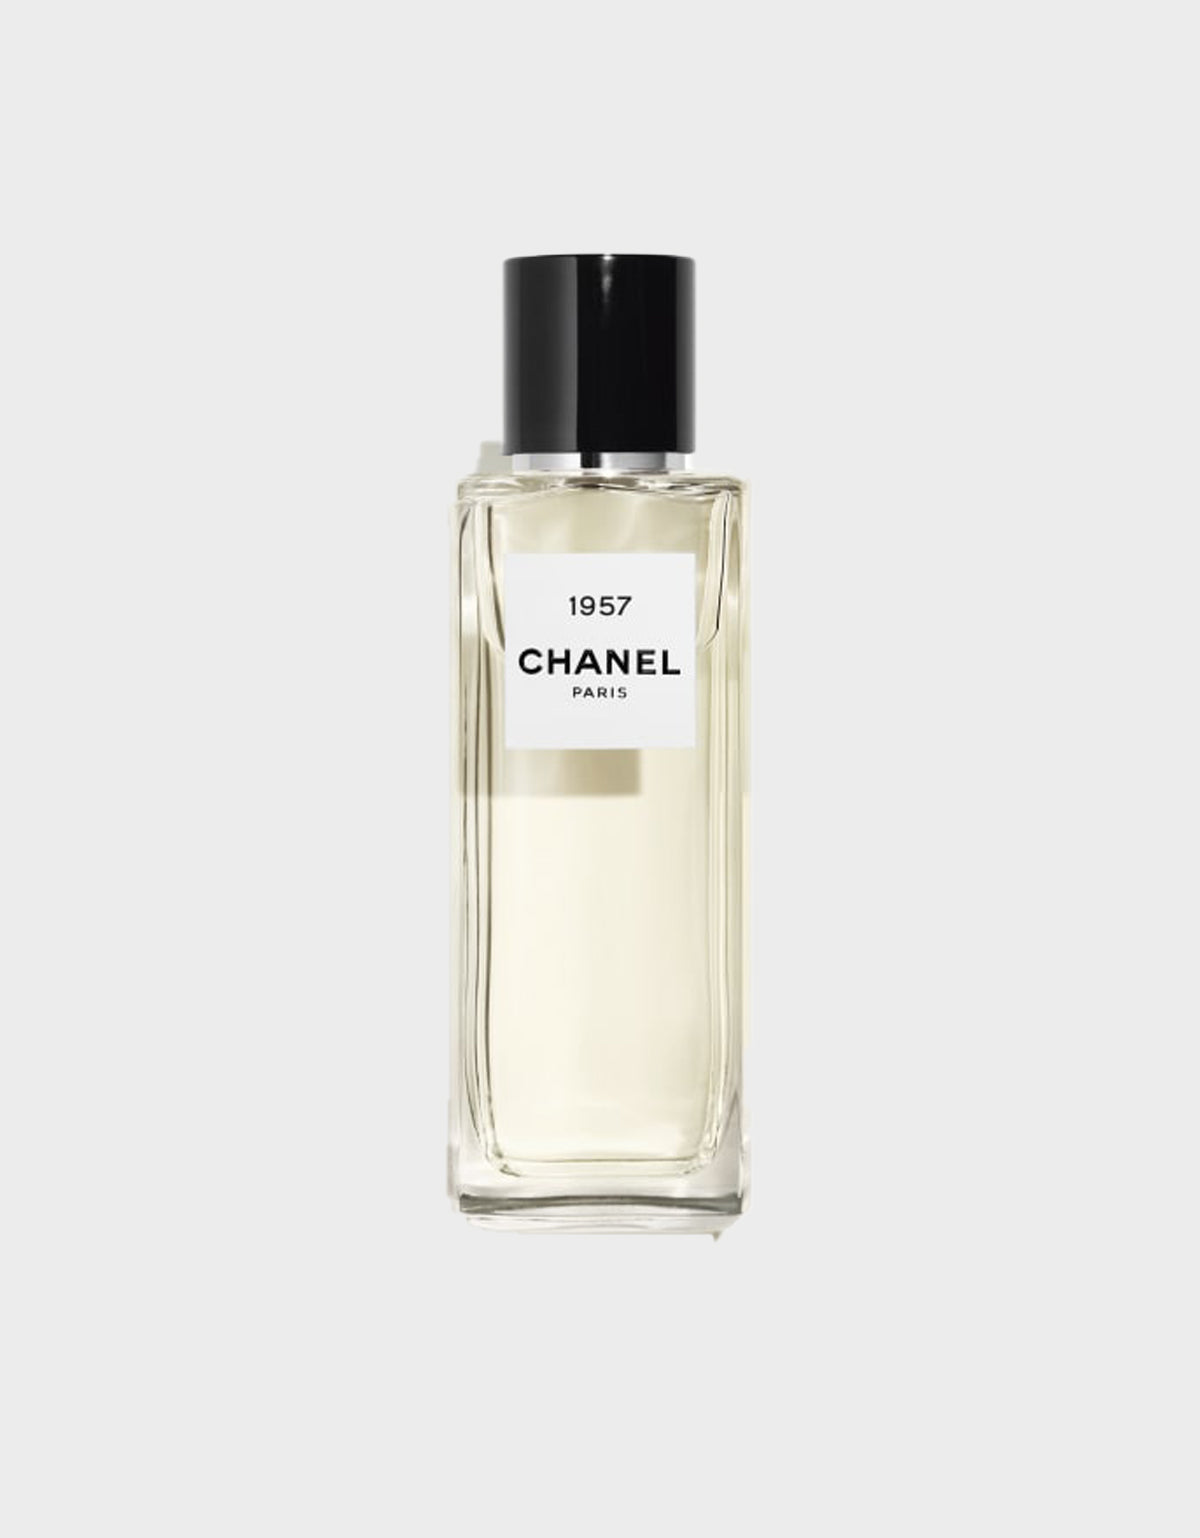 1957 Les Exclusifs Chanel